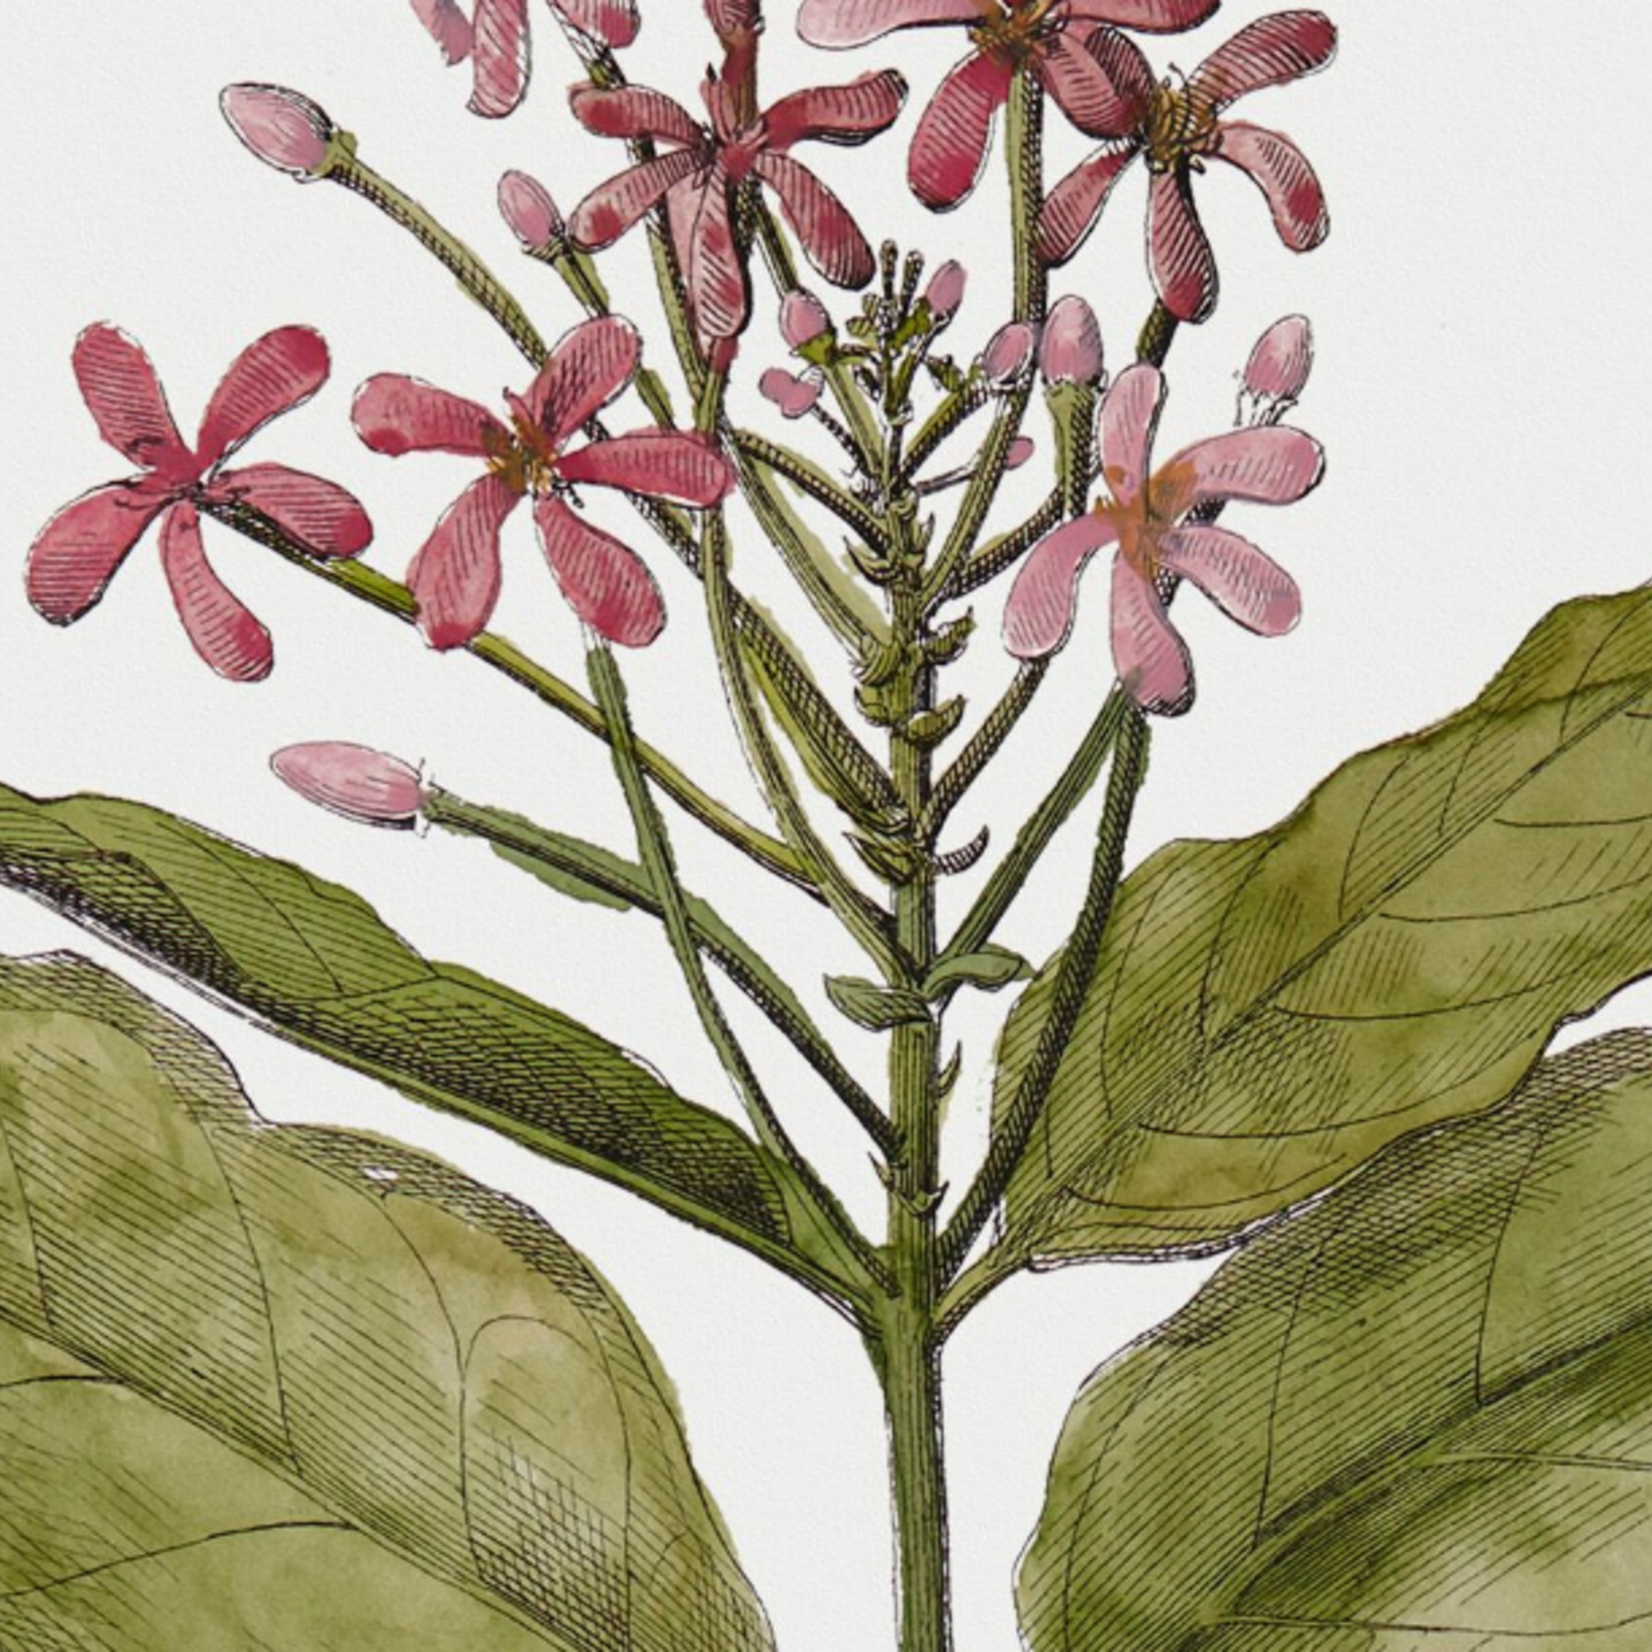 Framed Print on Rag Paper: Quiscalis Spinosa Botanical Print